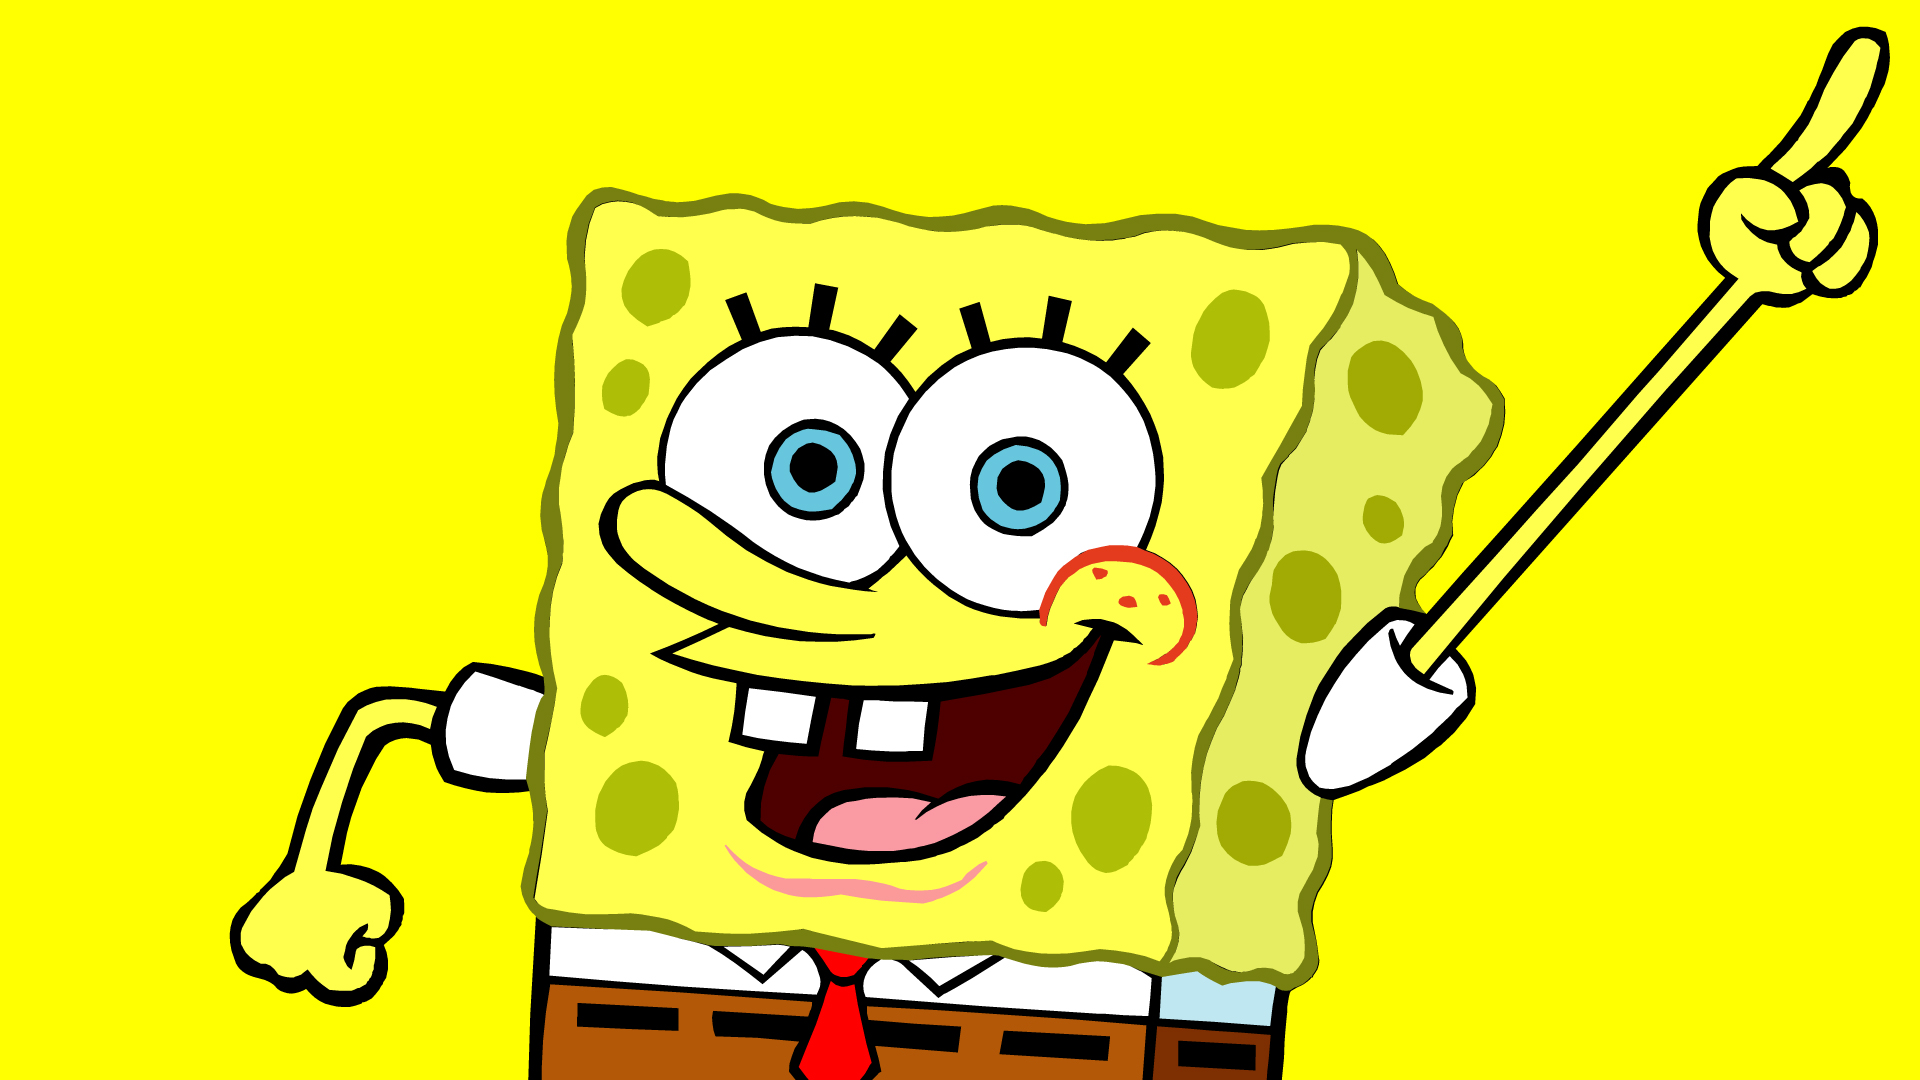 Spongebob Backgrounds free download | Wallpapers, Backgrounds ...